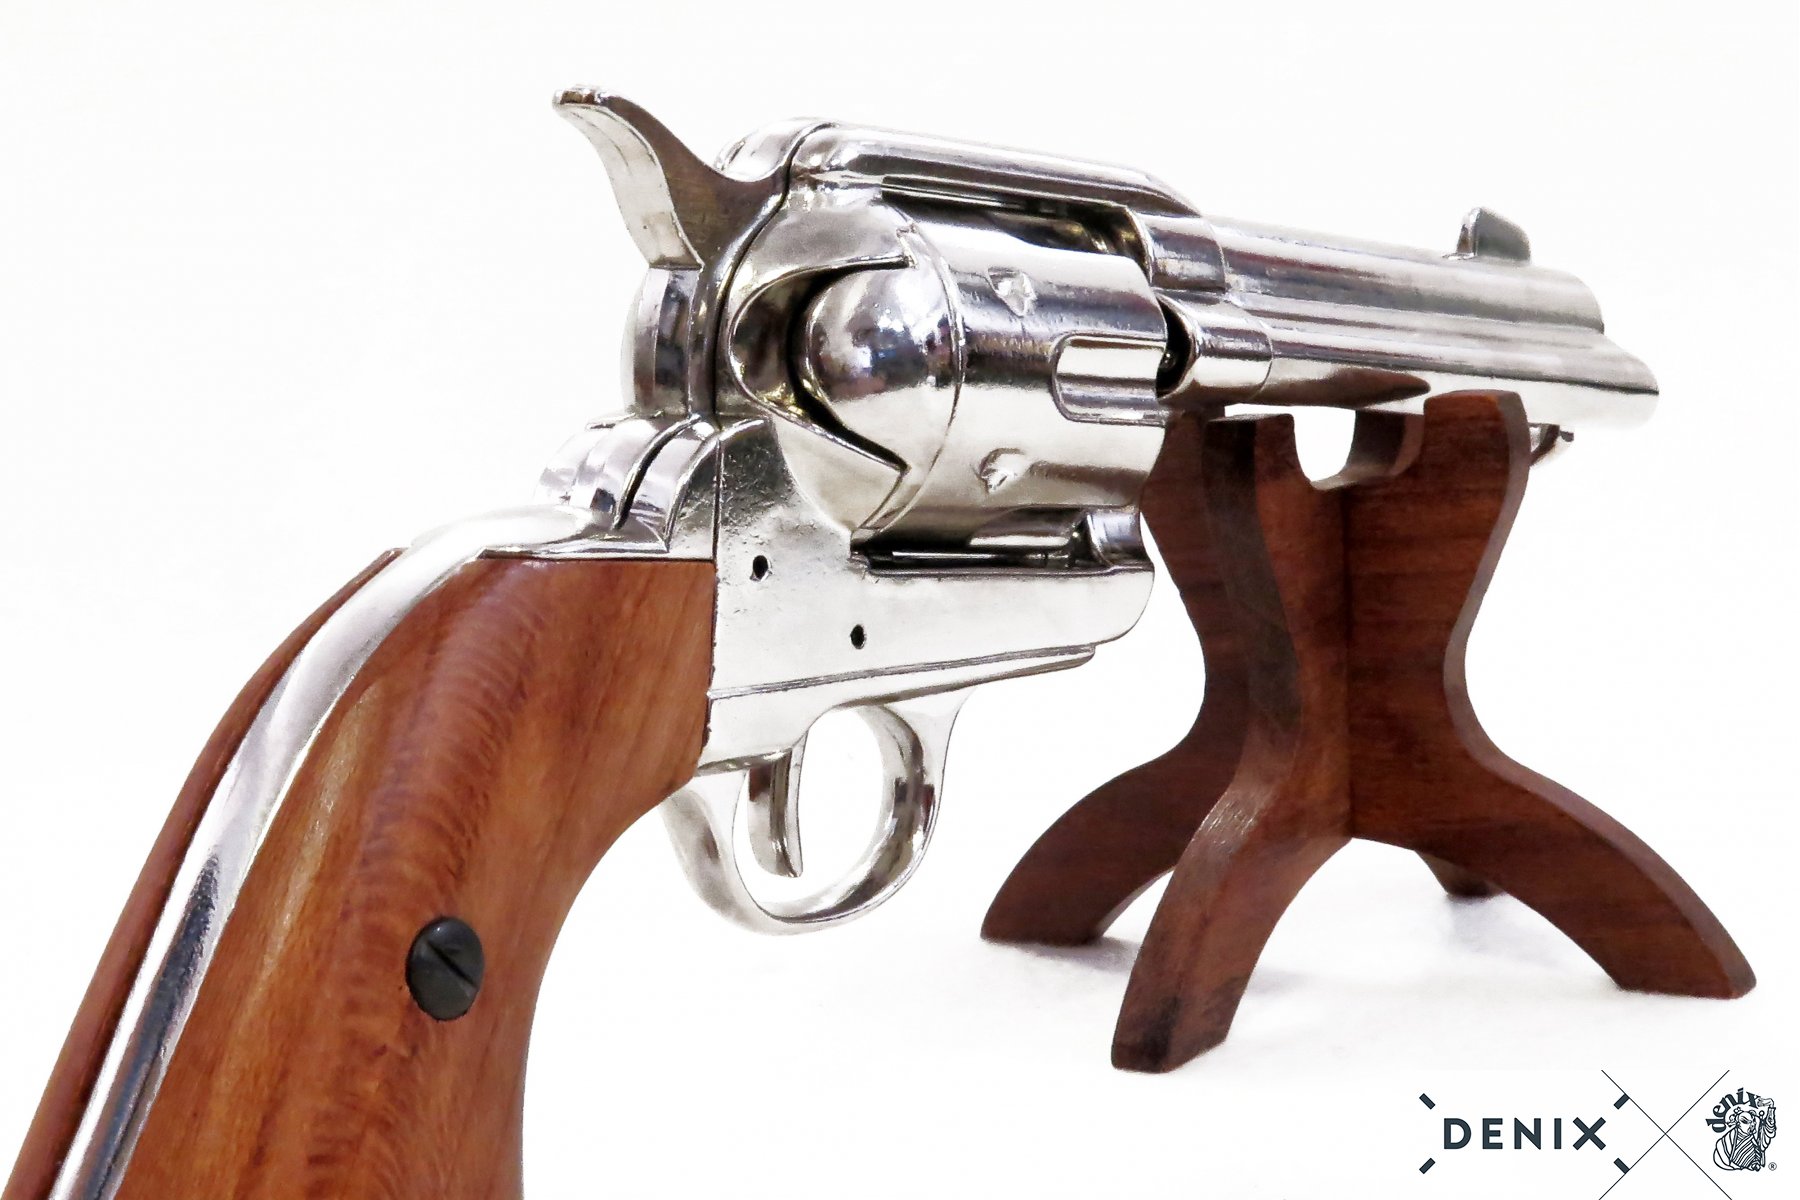 45er Colt Peacemaker vernickelt mit Holzgriff